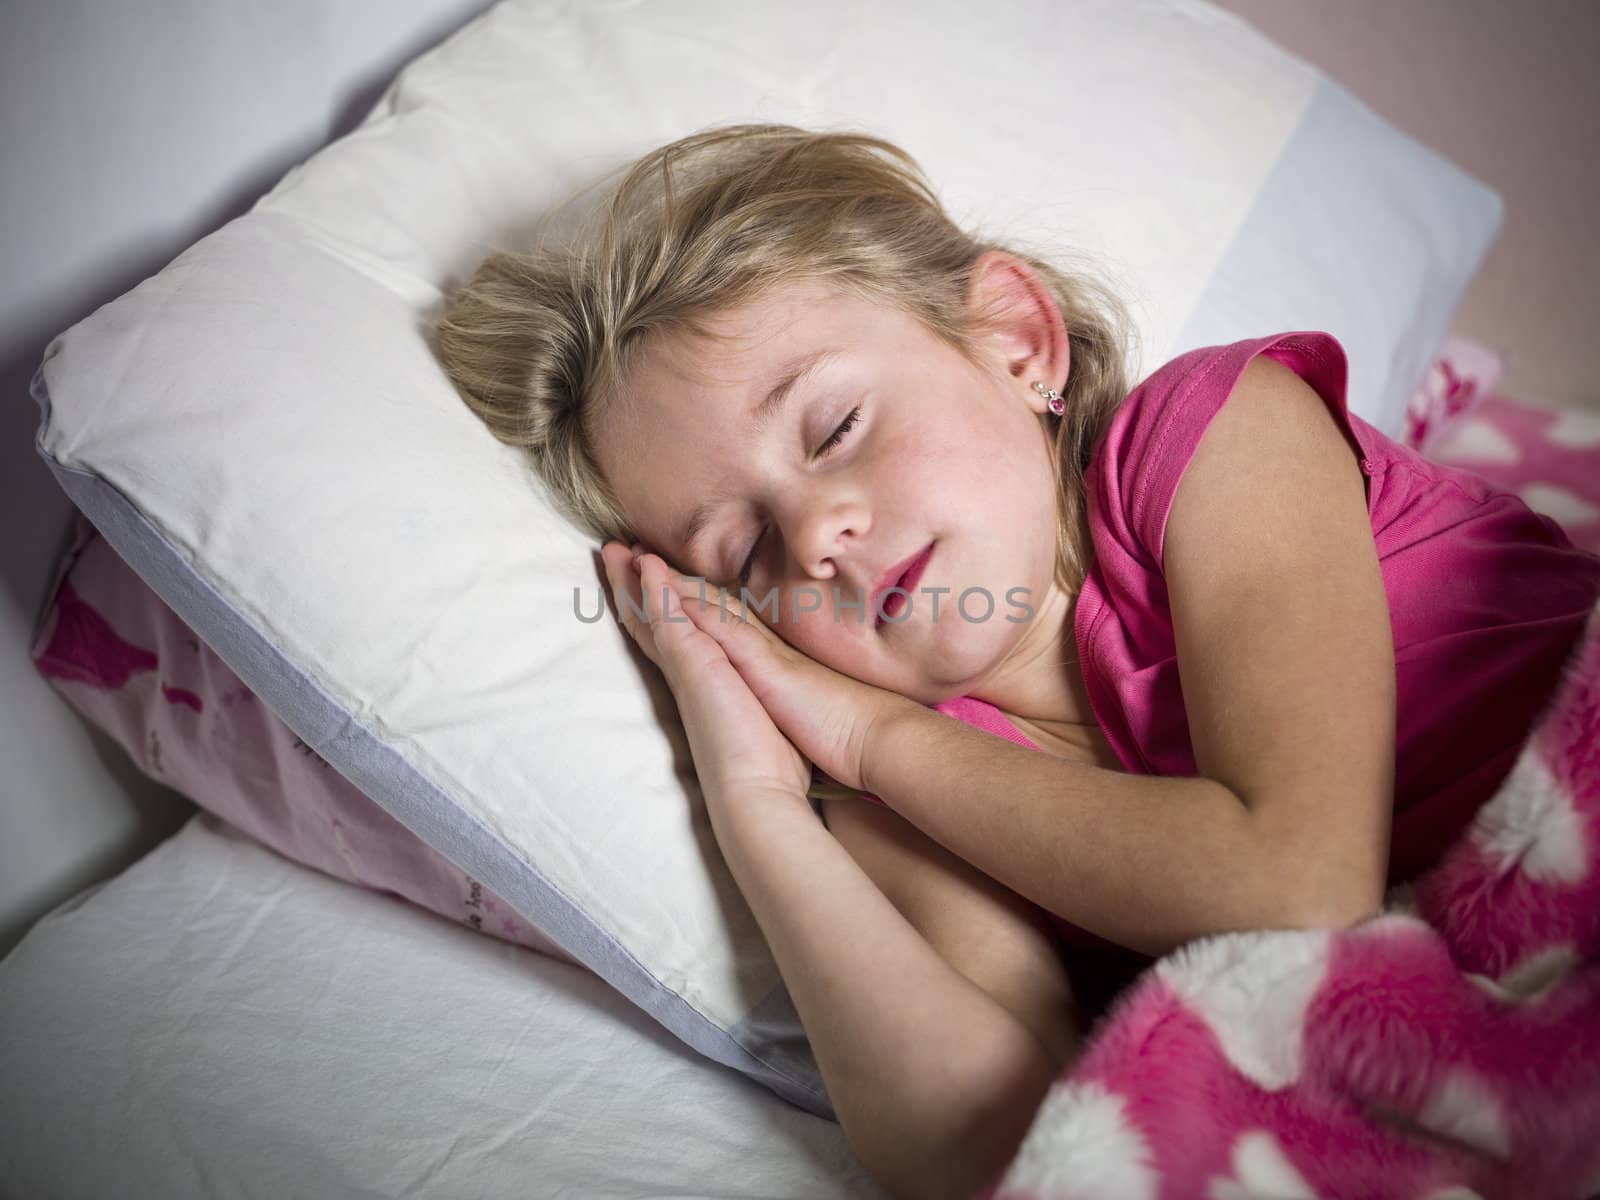 Young Girls sleeps by gemenacom